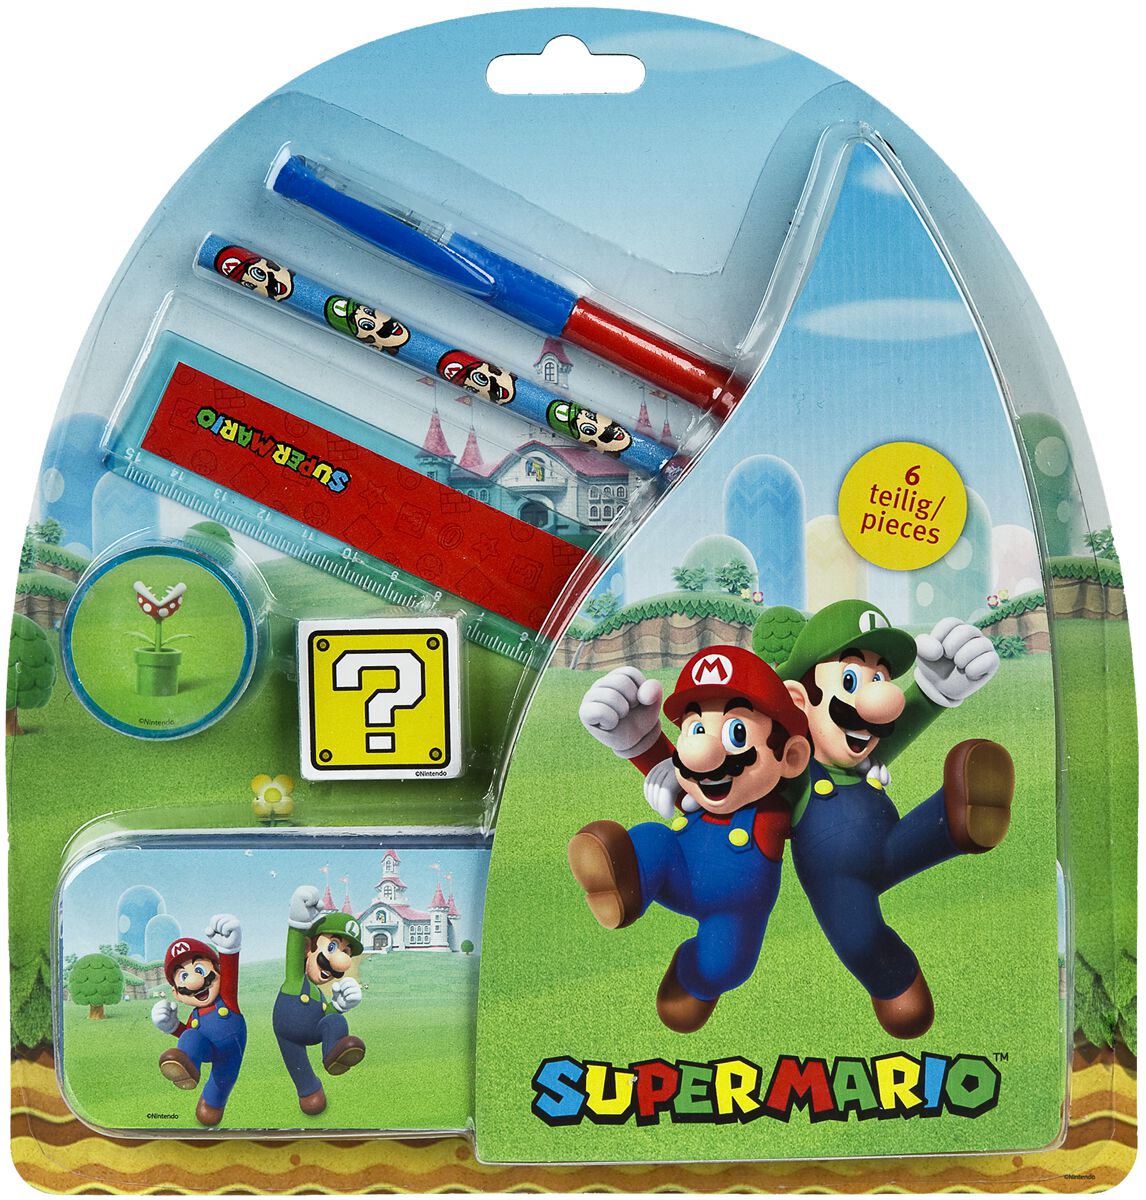 Cancelleria Gaming di Super Mario - Stationery Set - Unisex - multicolore product